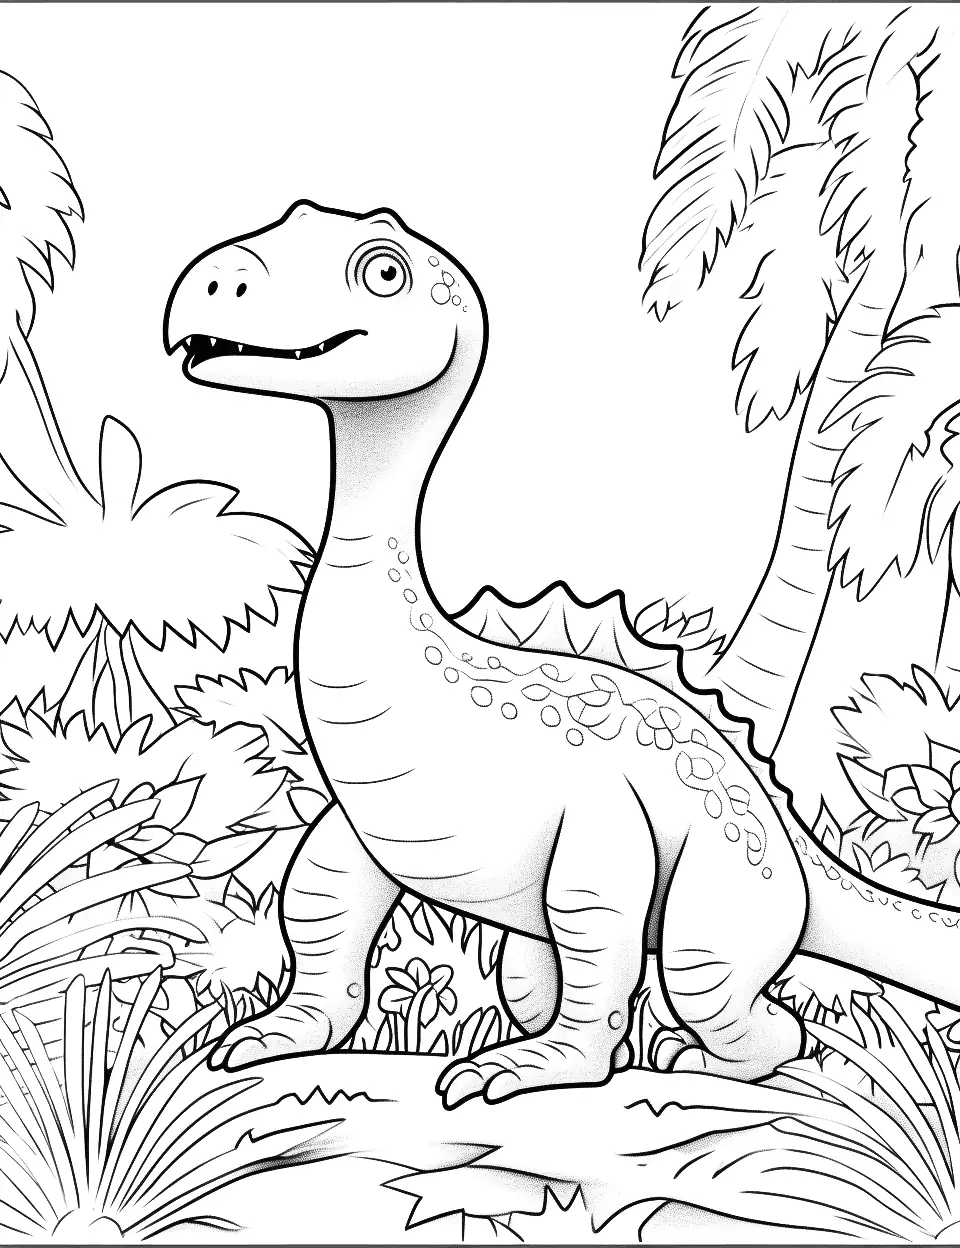 Raptor in the Rainforest Dinosaur Coloring Page - A raptor navigating through lush prehistoric rainforest.